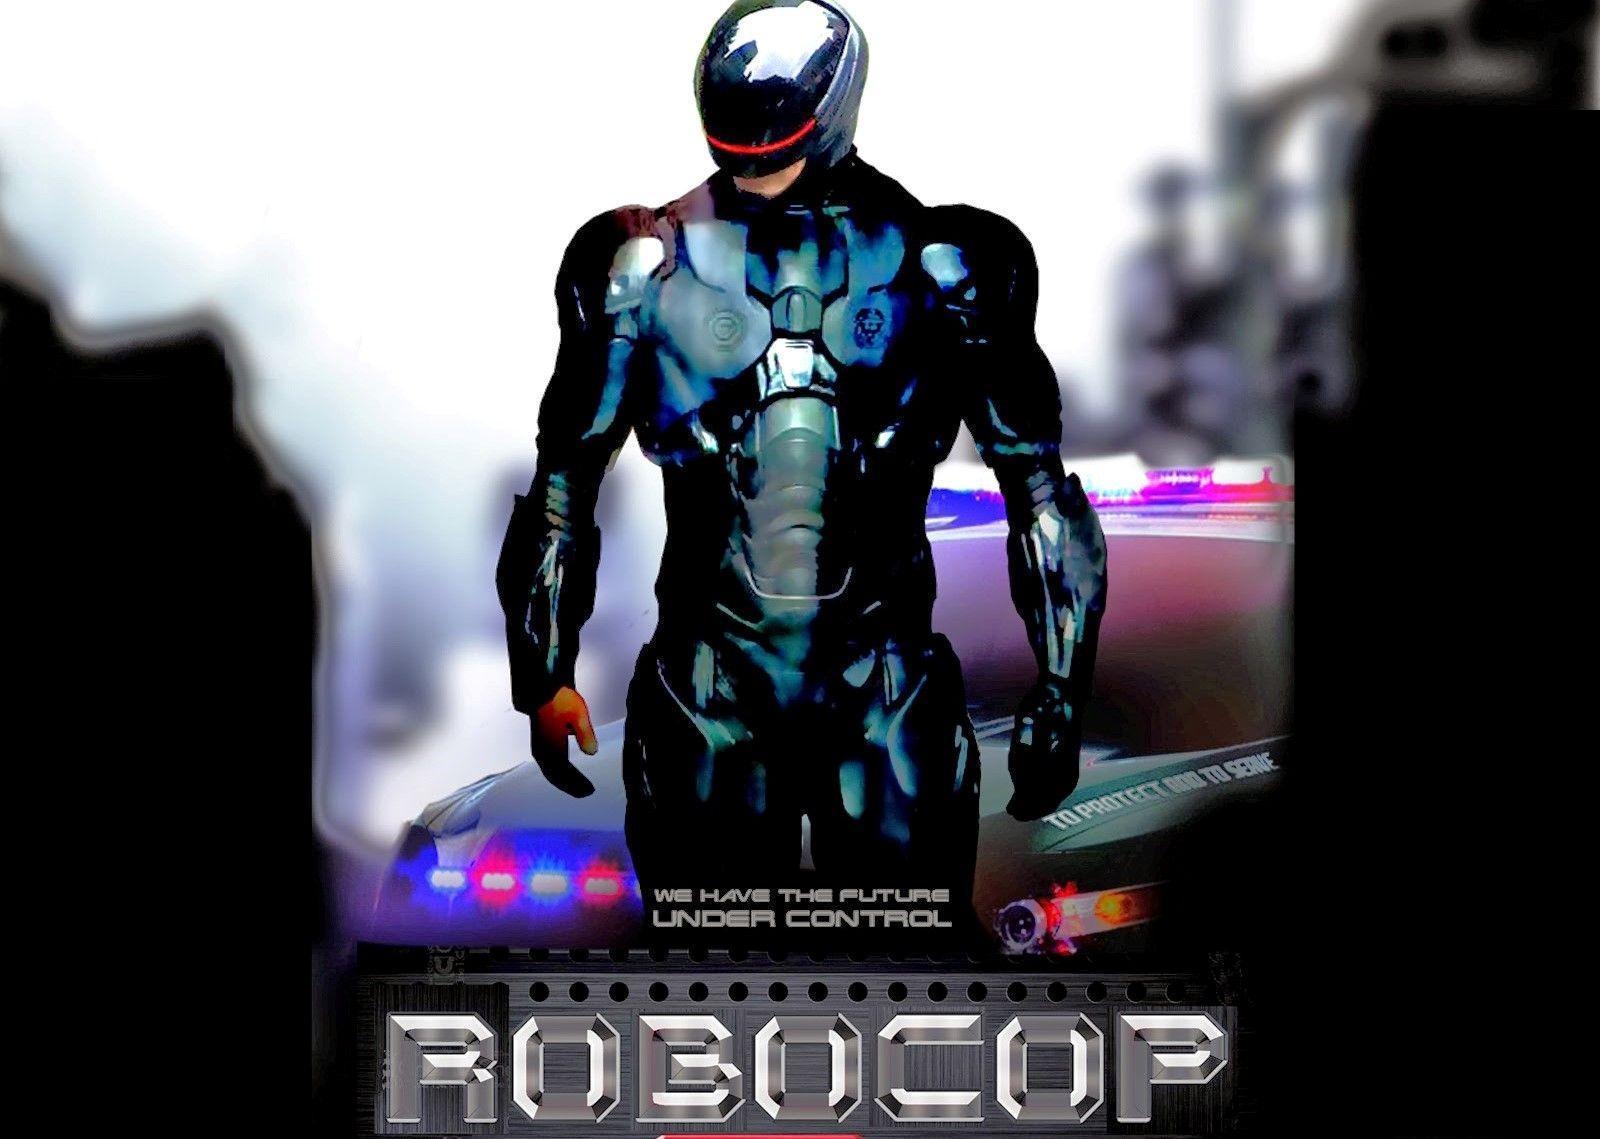 Robocop HD Wallpaper Image Picture Photo Download